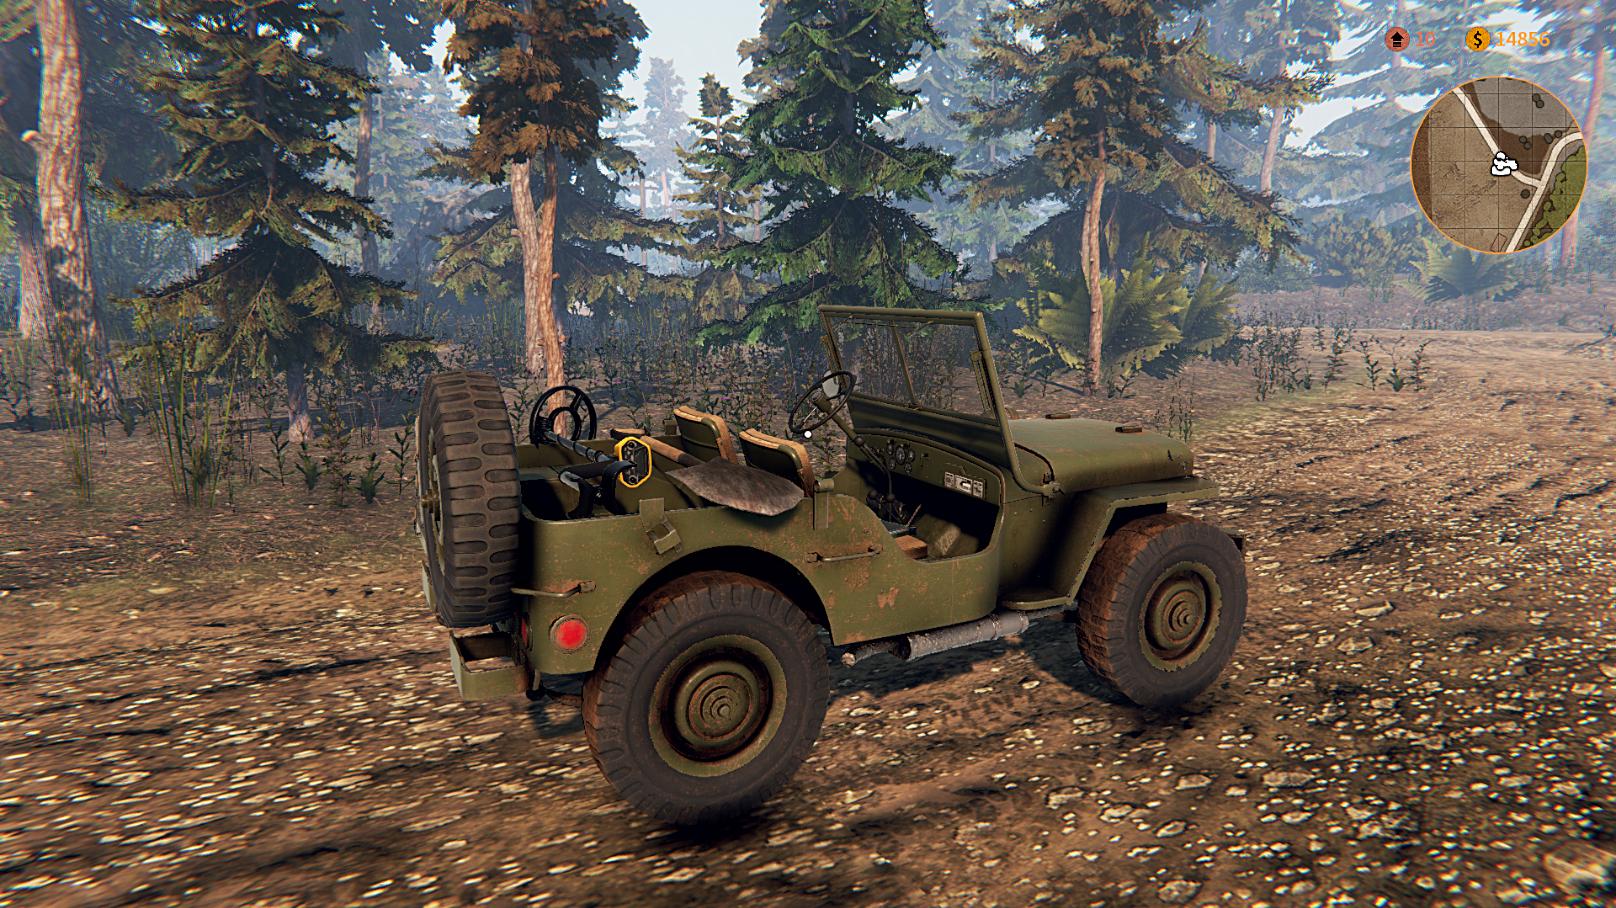 Screenshot №18 from game Tank Mechanic Simulator